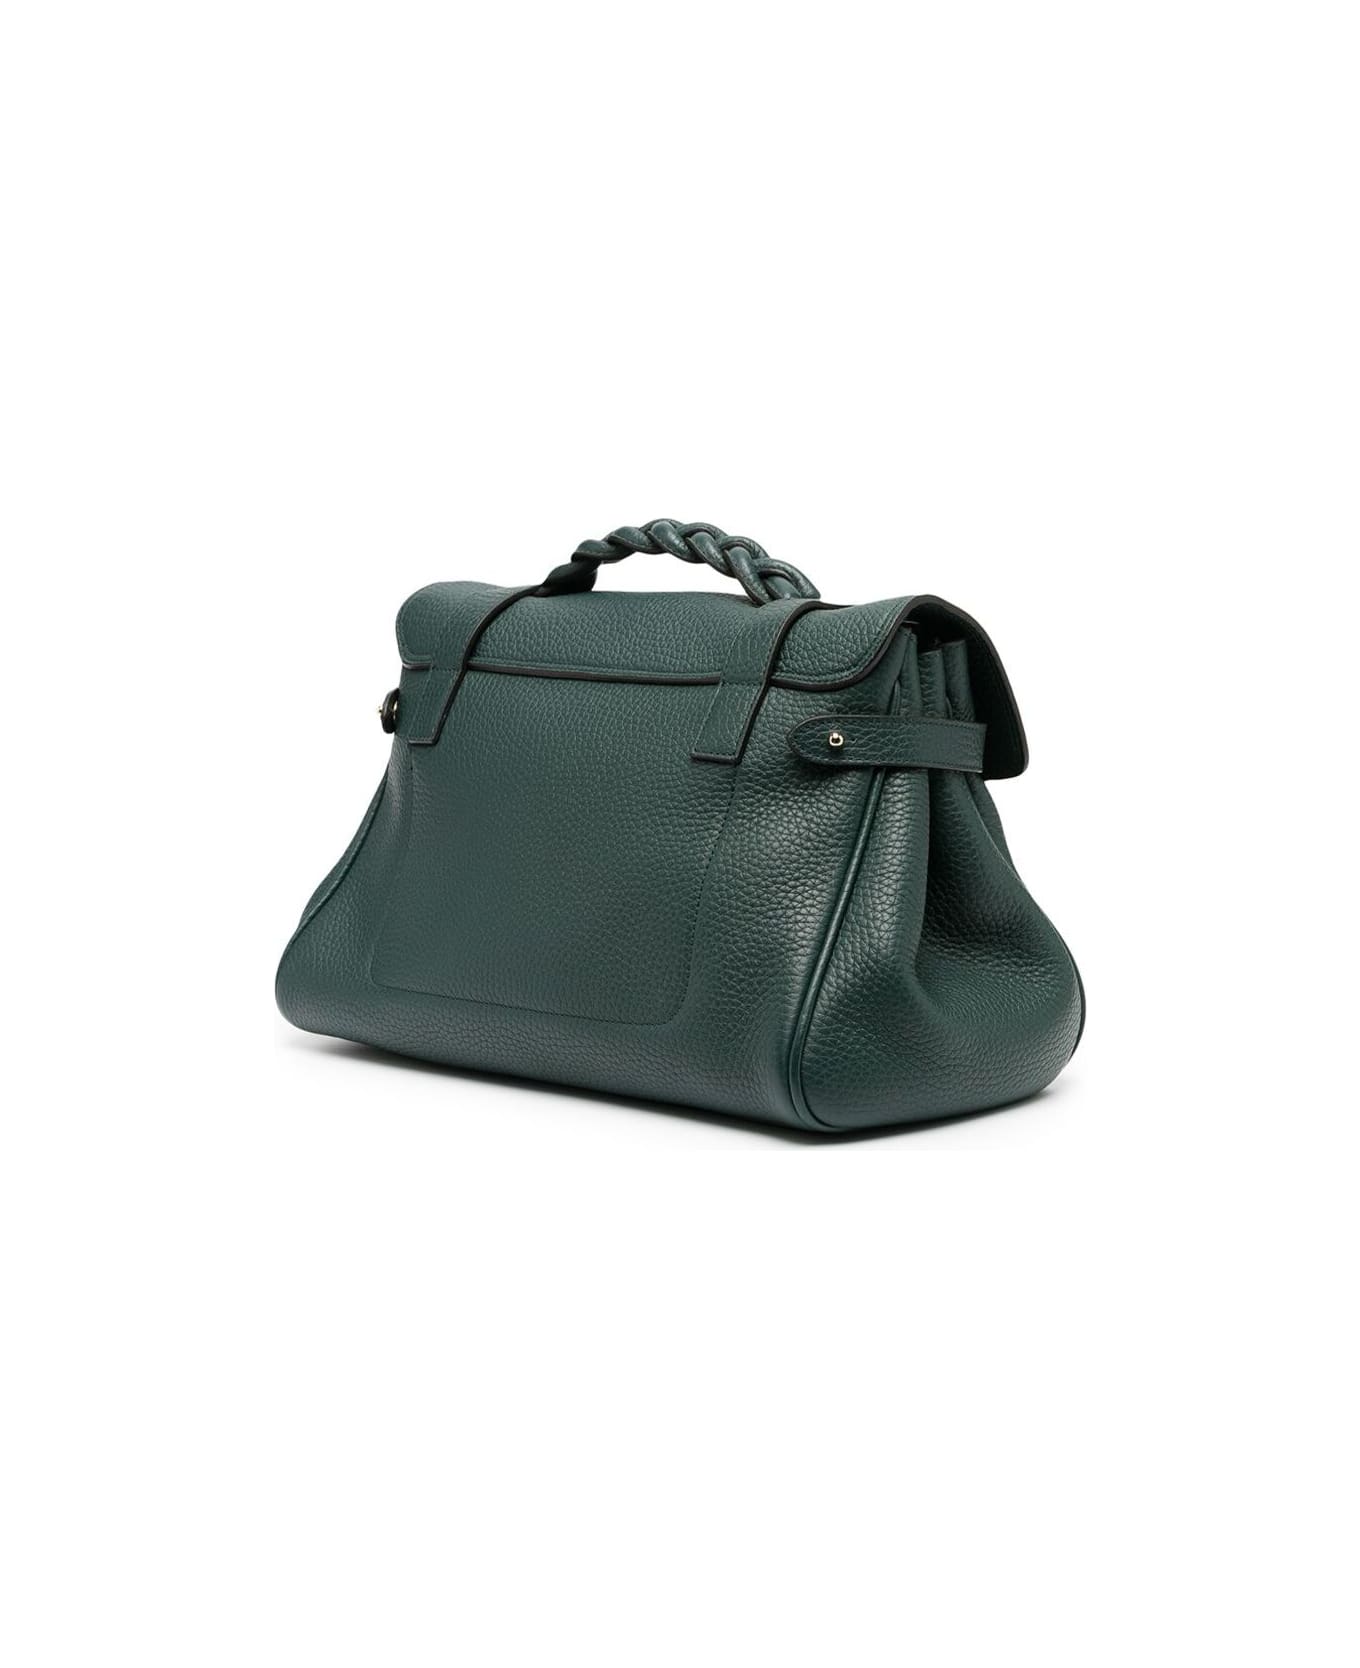 Mulberry Woman's Alexa Heavy Green Leather Handbag - Green